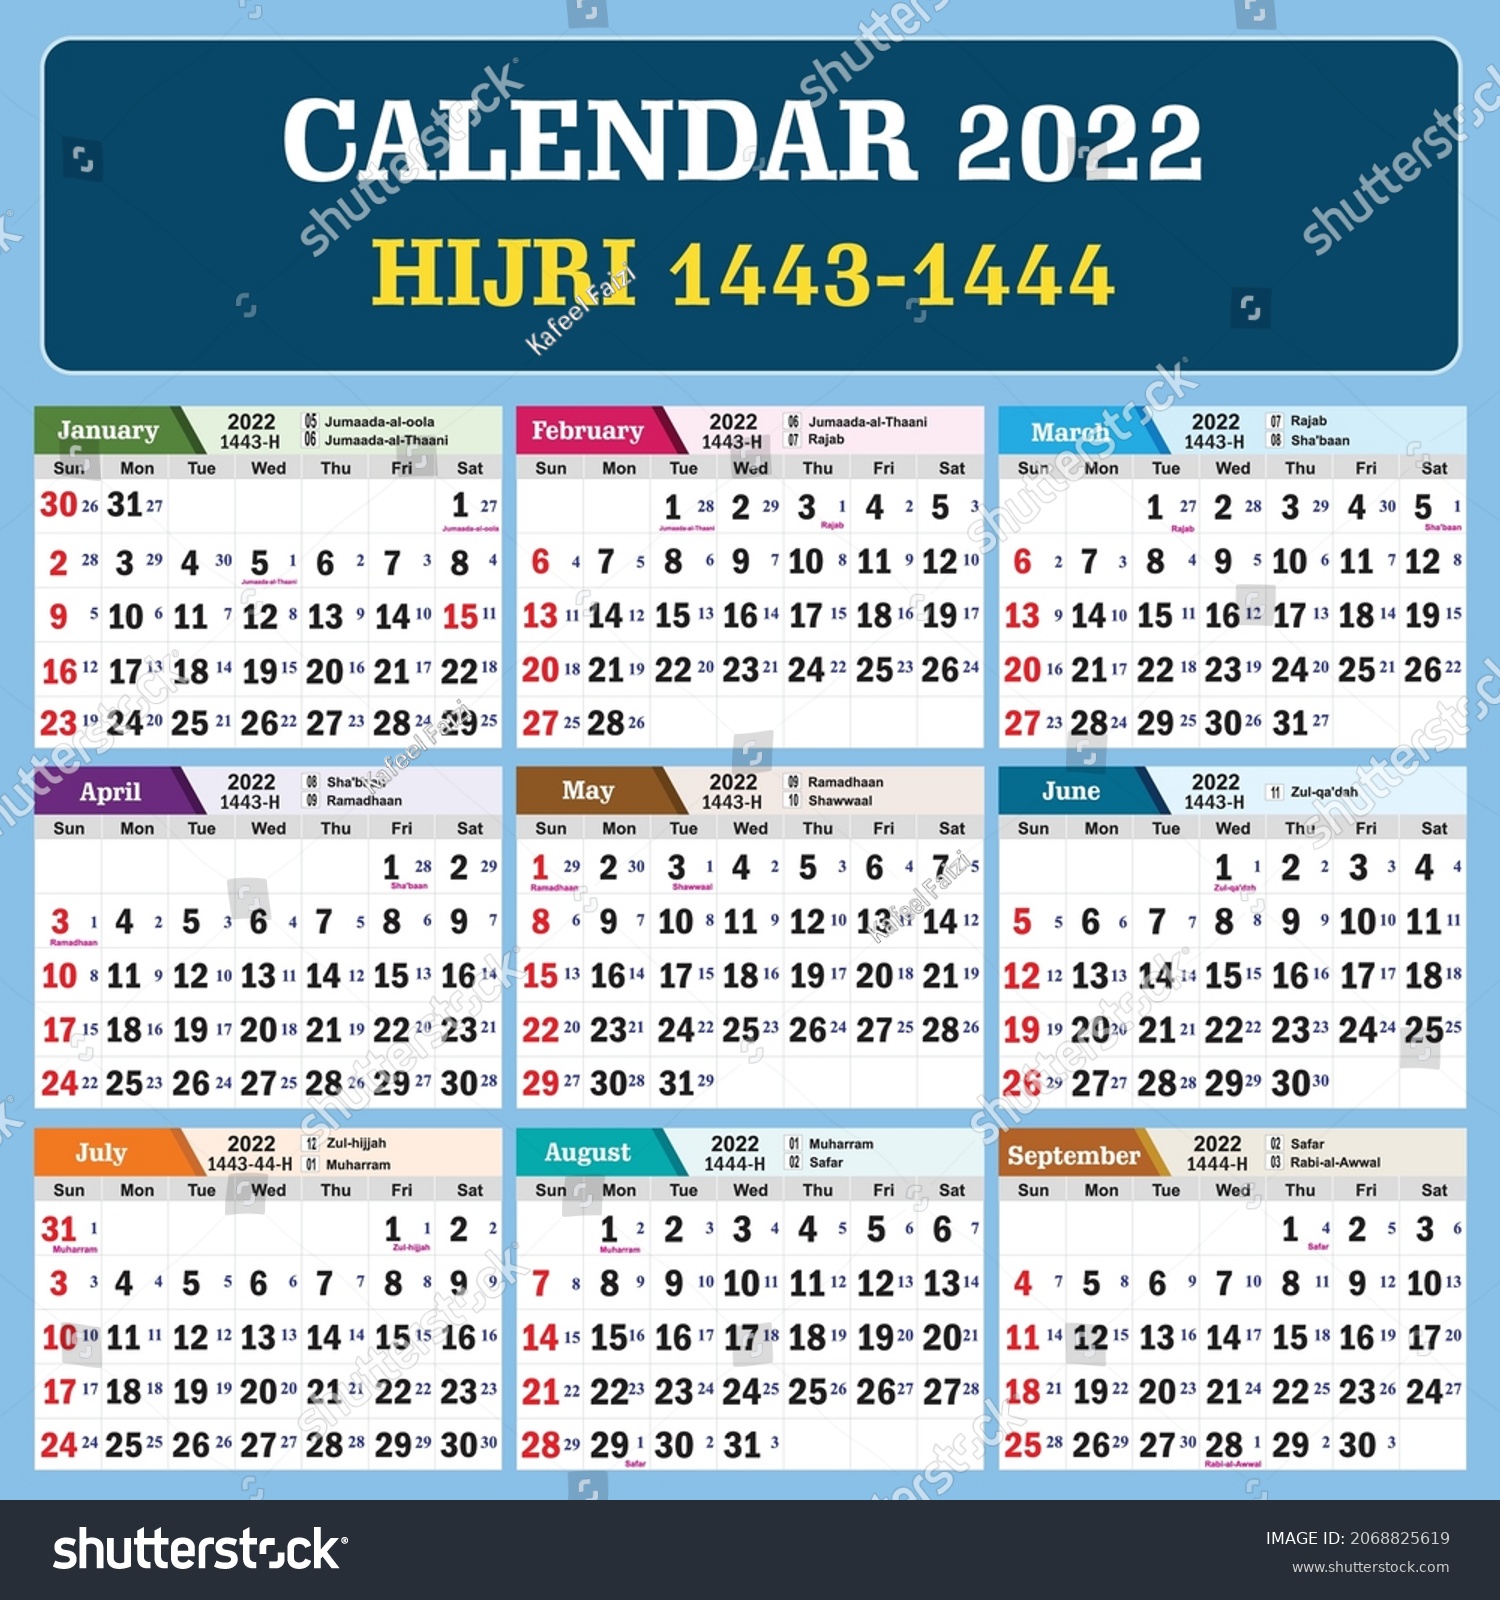 Calendar 2022 Hijri Islamic Date Lunar Vector de stoc (royalty free